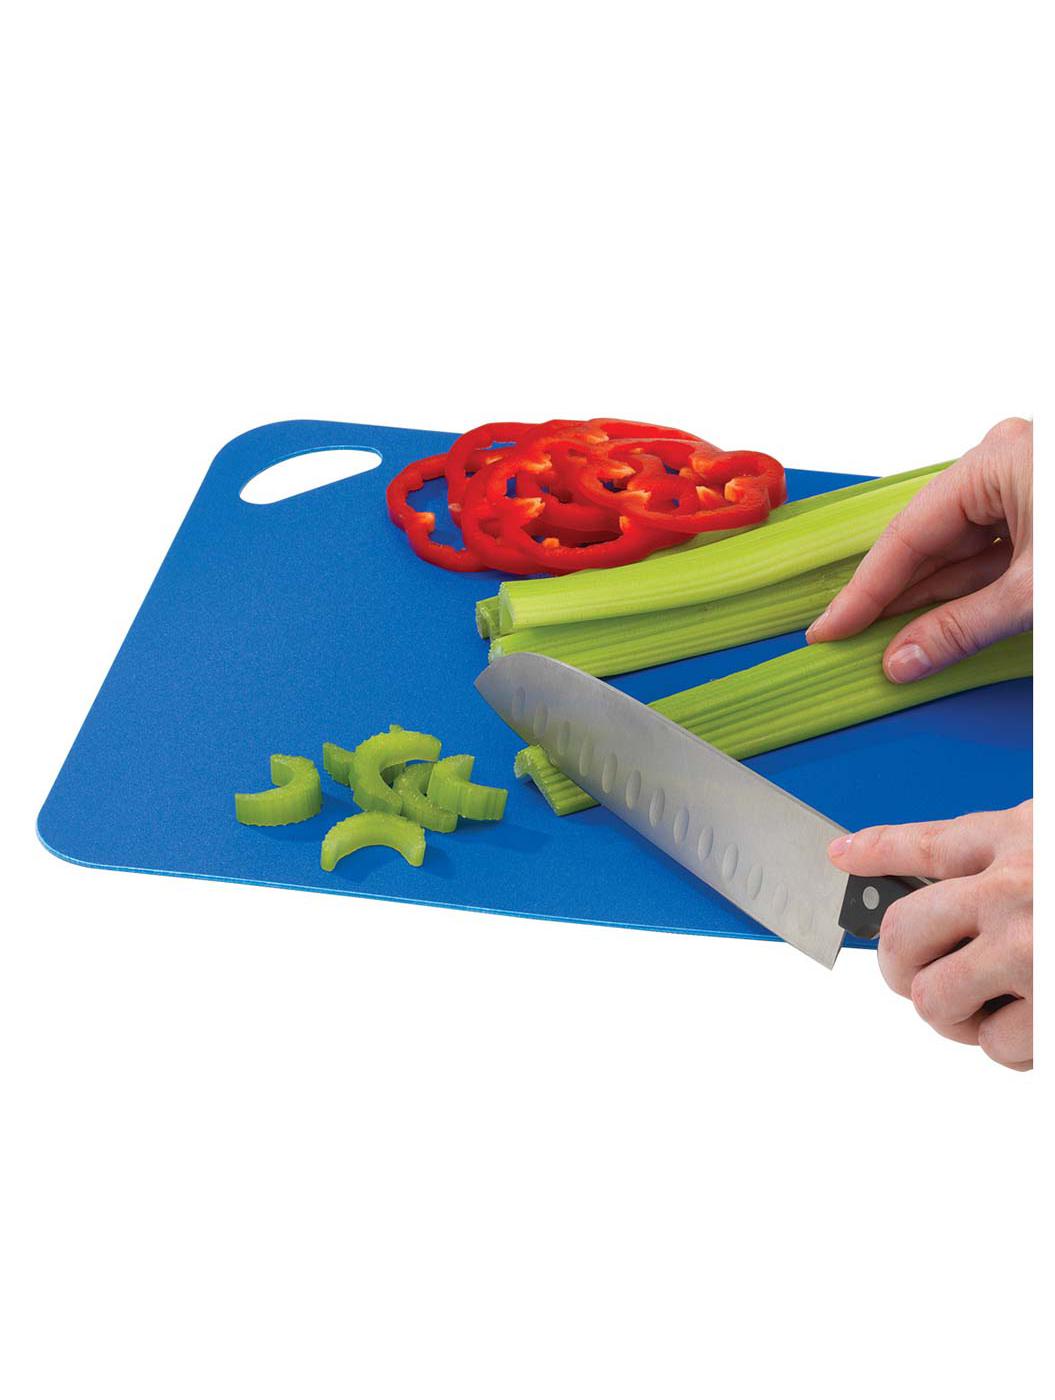 Good Cook Non-Slip Flexible Cutting Board - Shop Cutting Boards at H-E-B